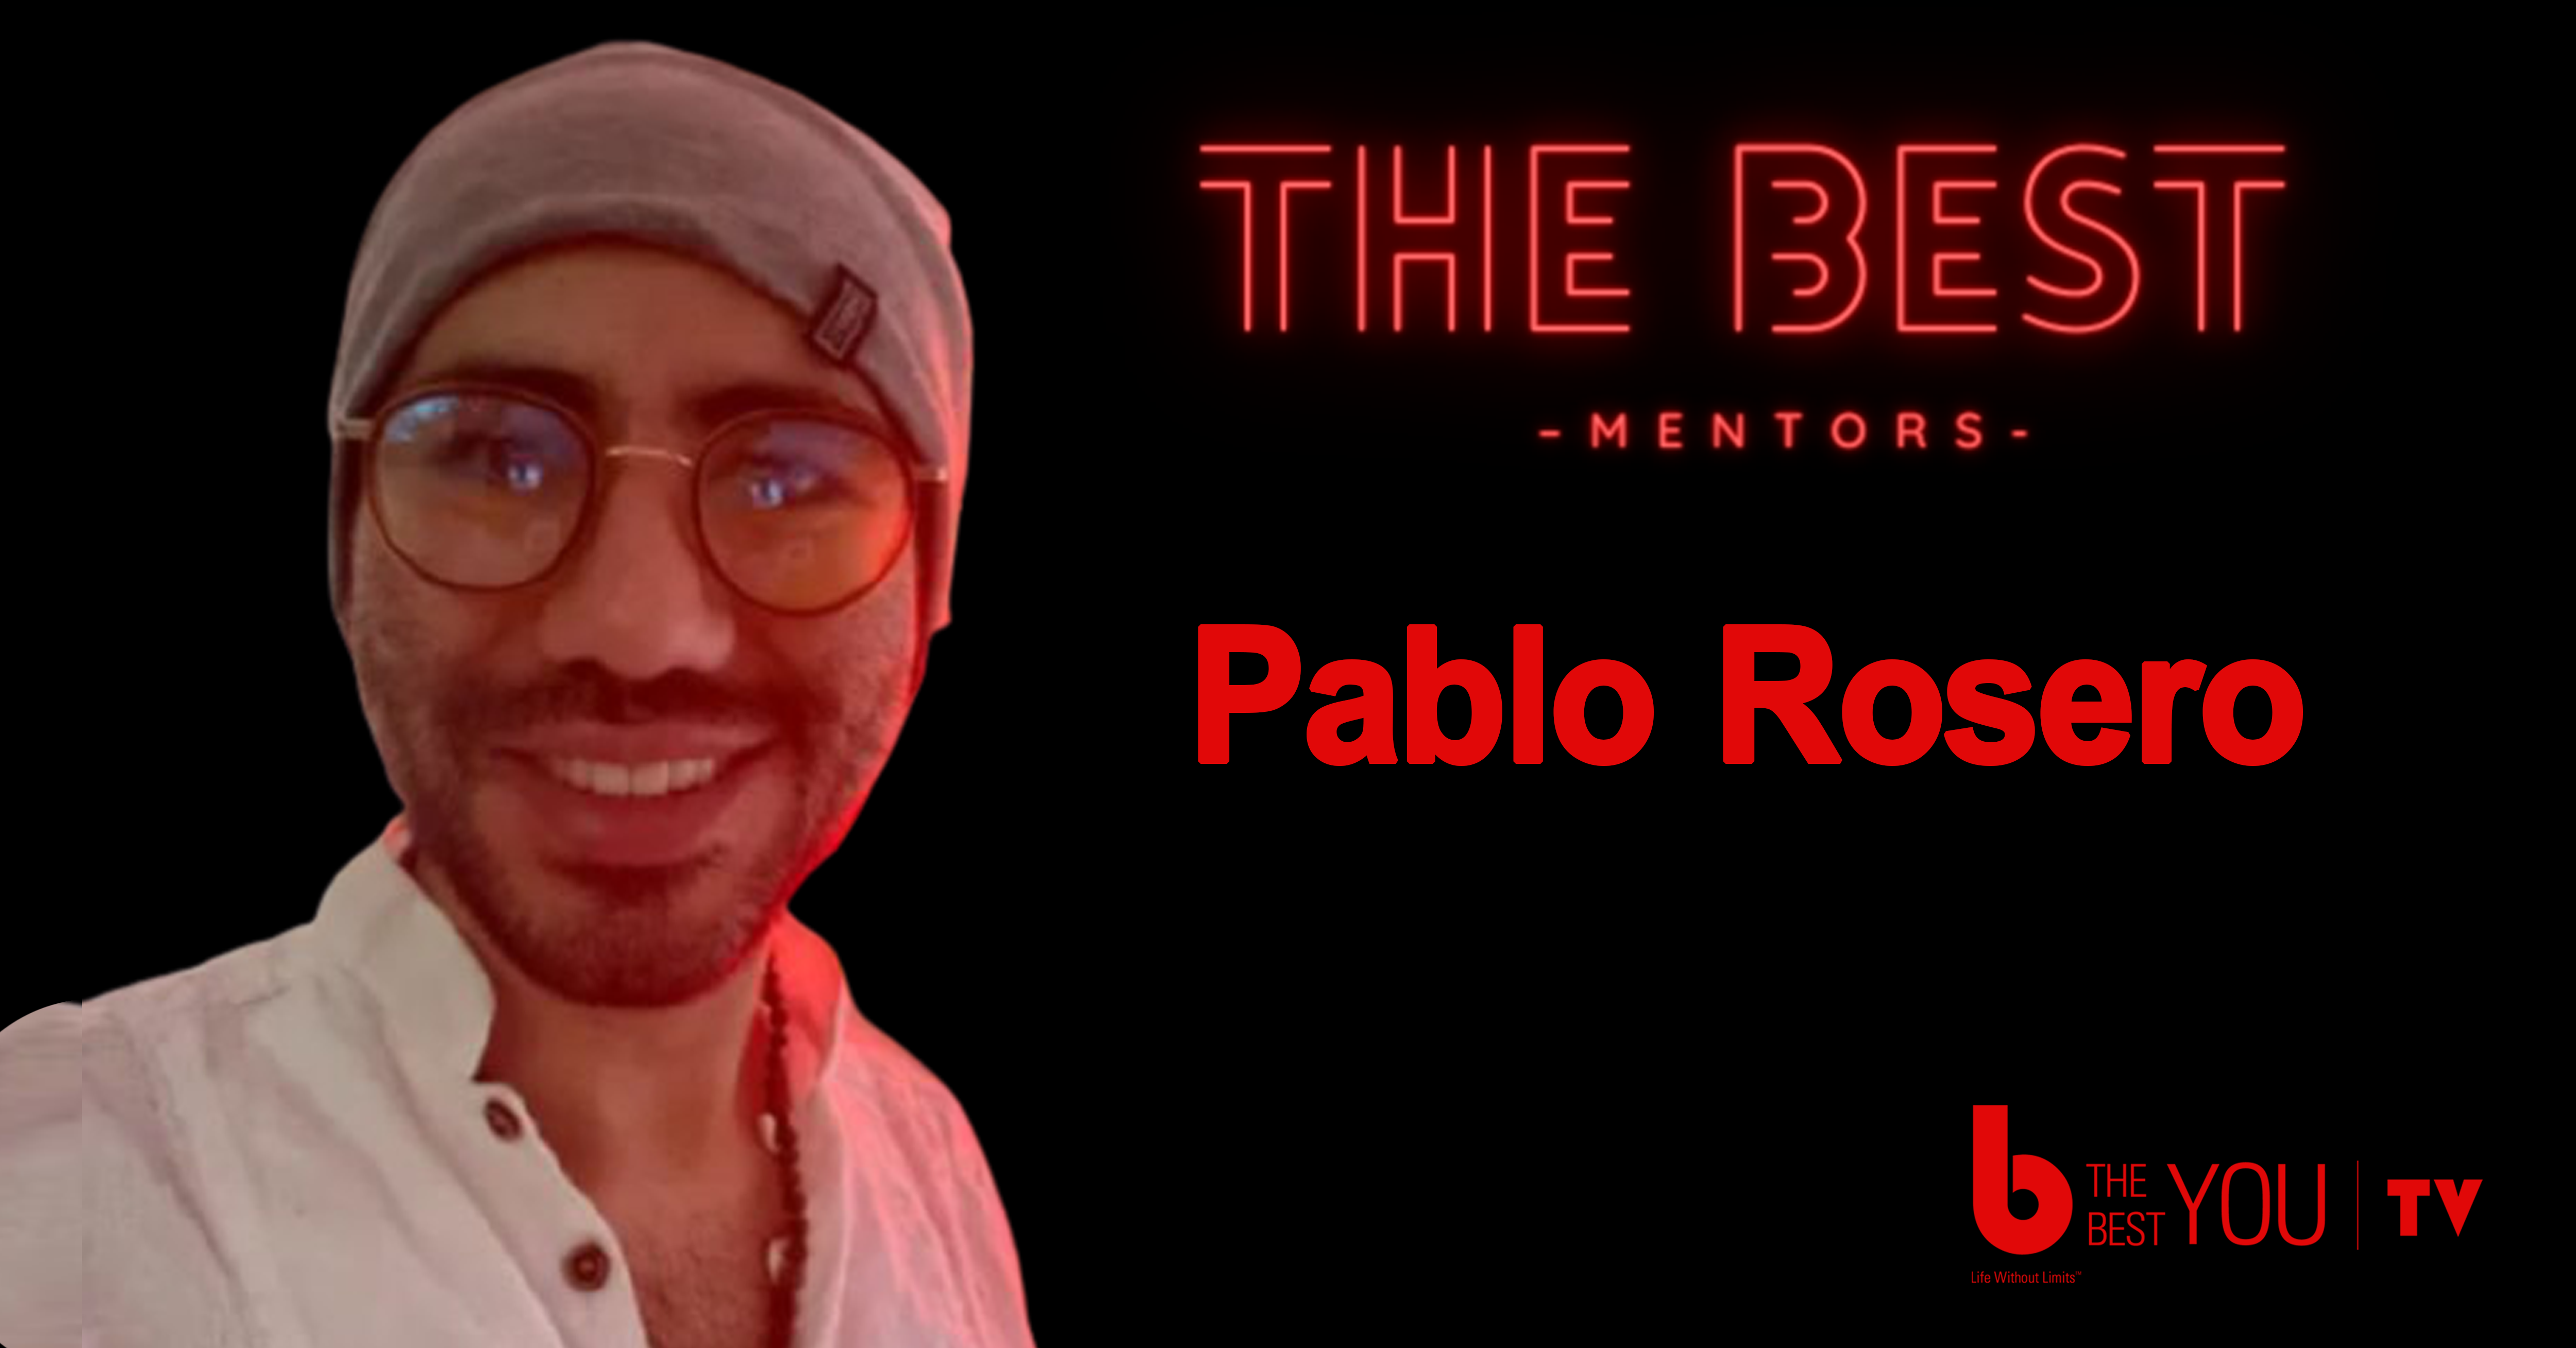 Pablo Rosero